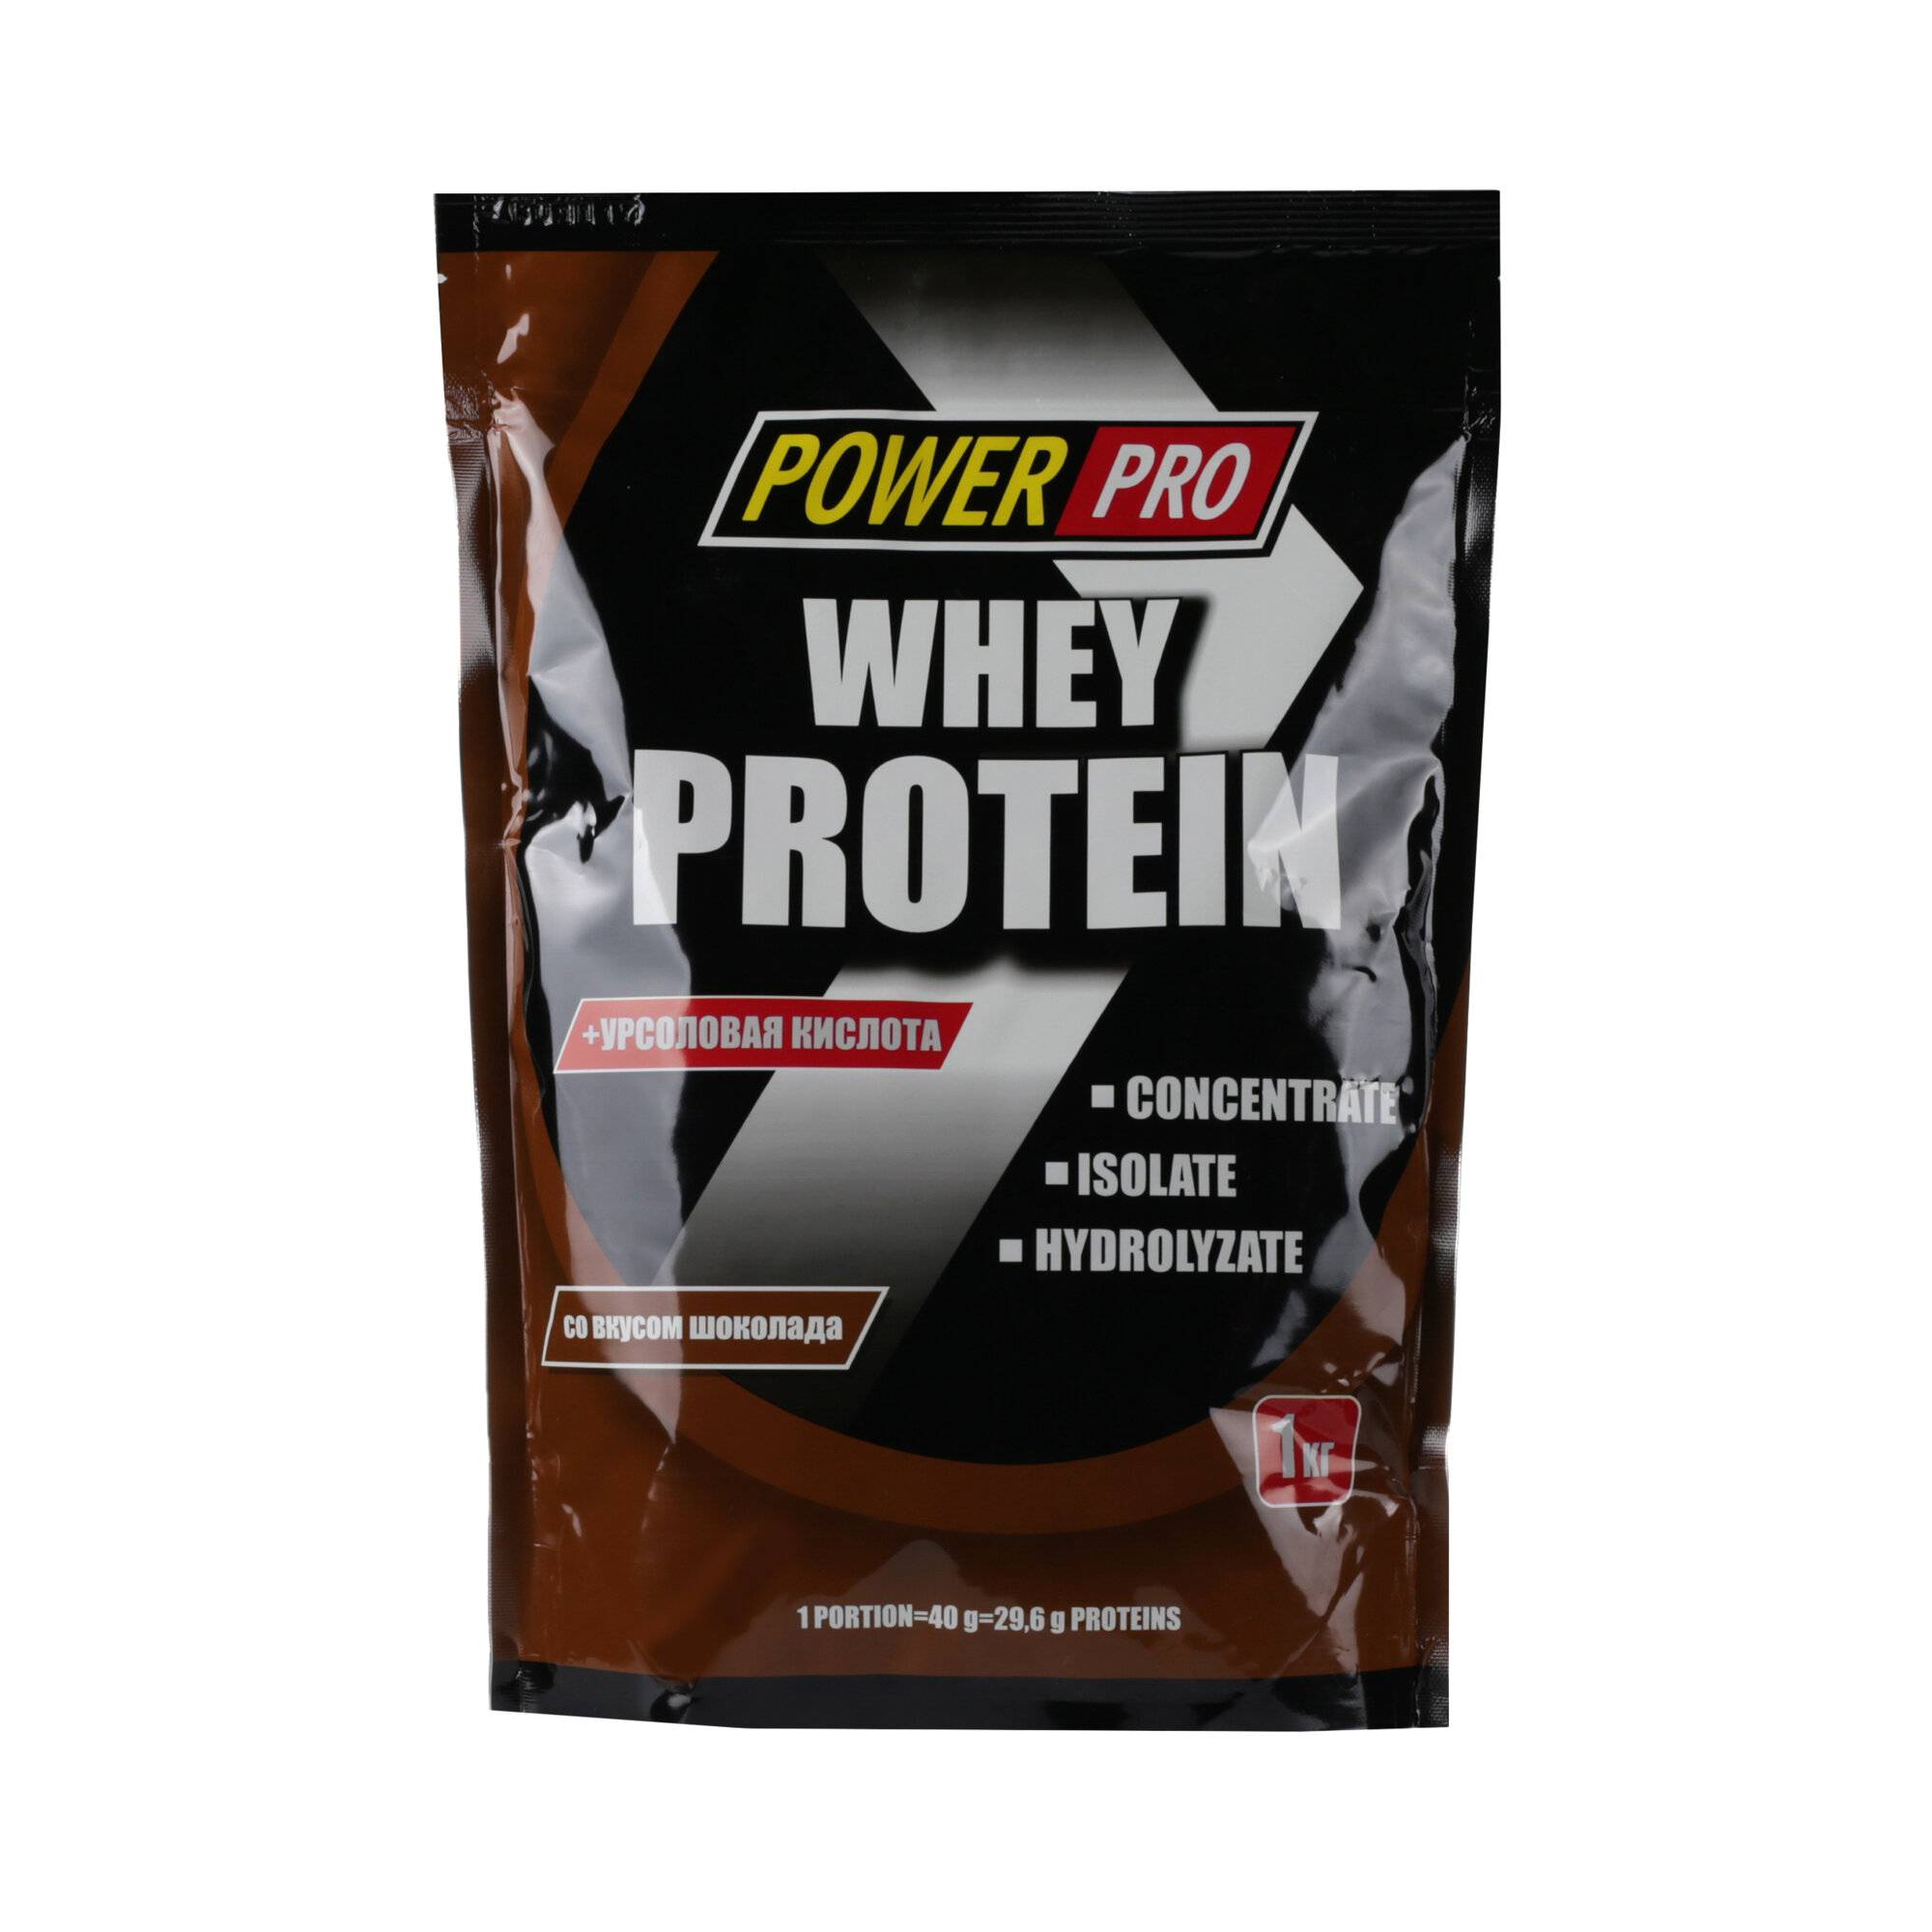 Отличный протеин - отзывы о whey protein power pro